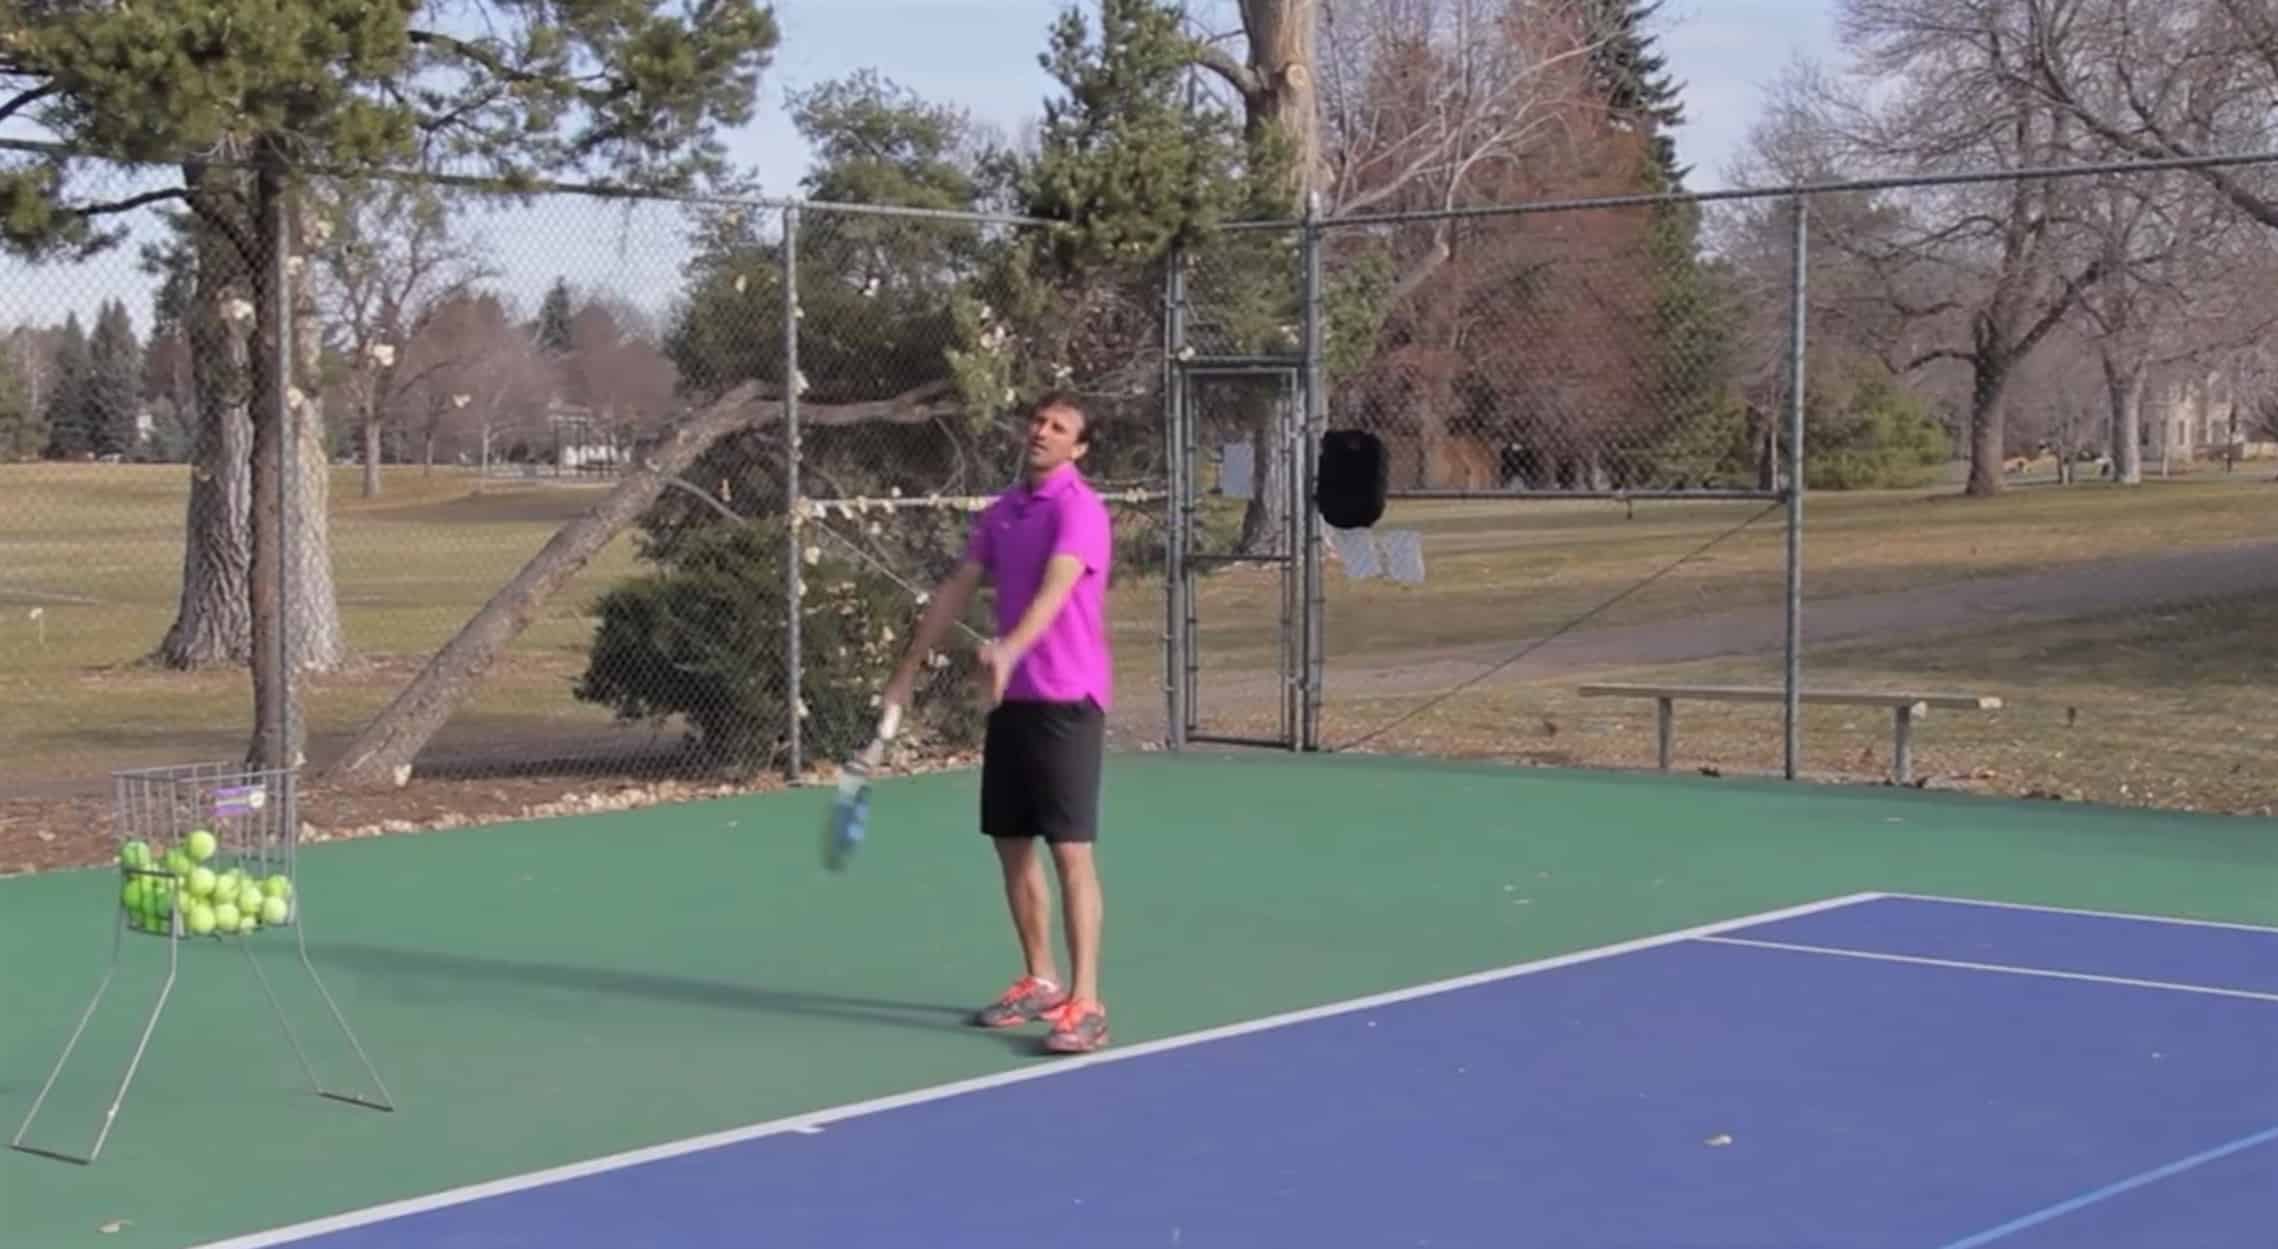 Jeff Salzenstein mimicking tossing a ball for a tennis serve